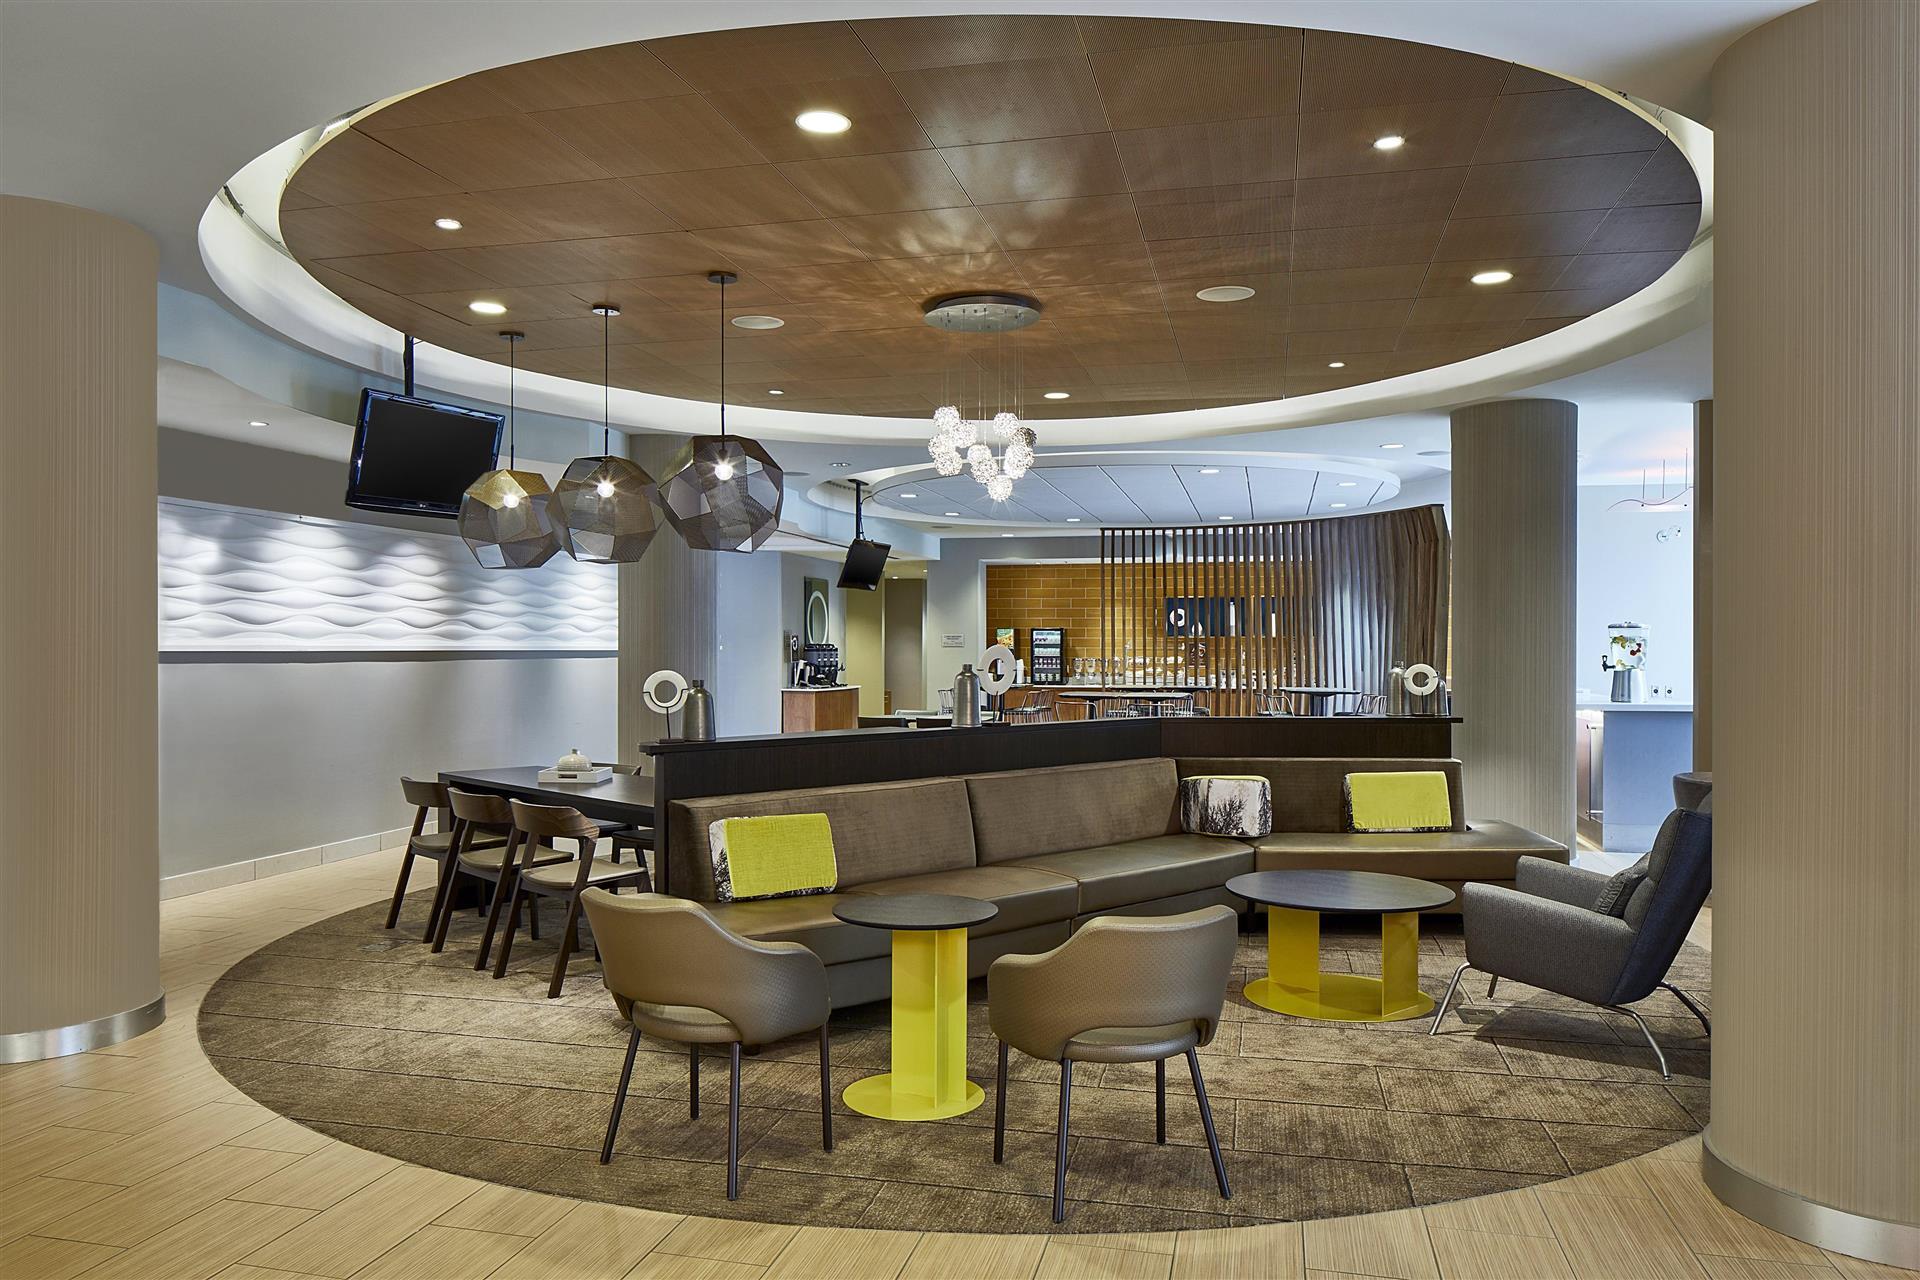 SpringHill Suites Atlanta Airport Gateway in College Park, GA